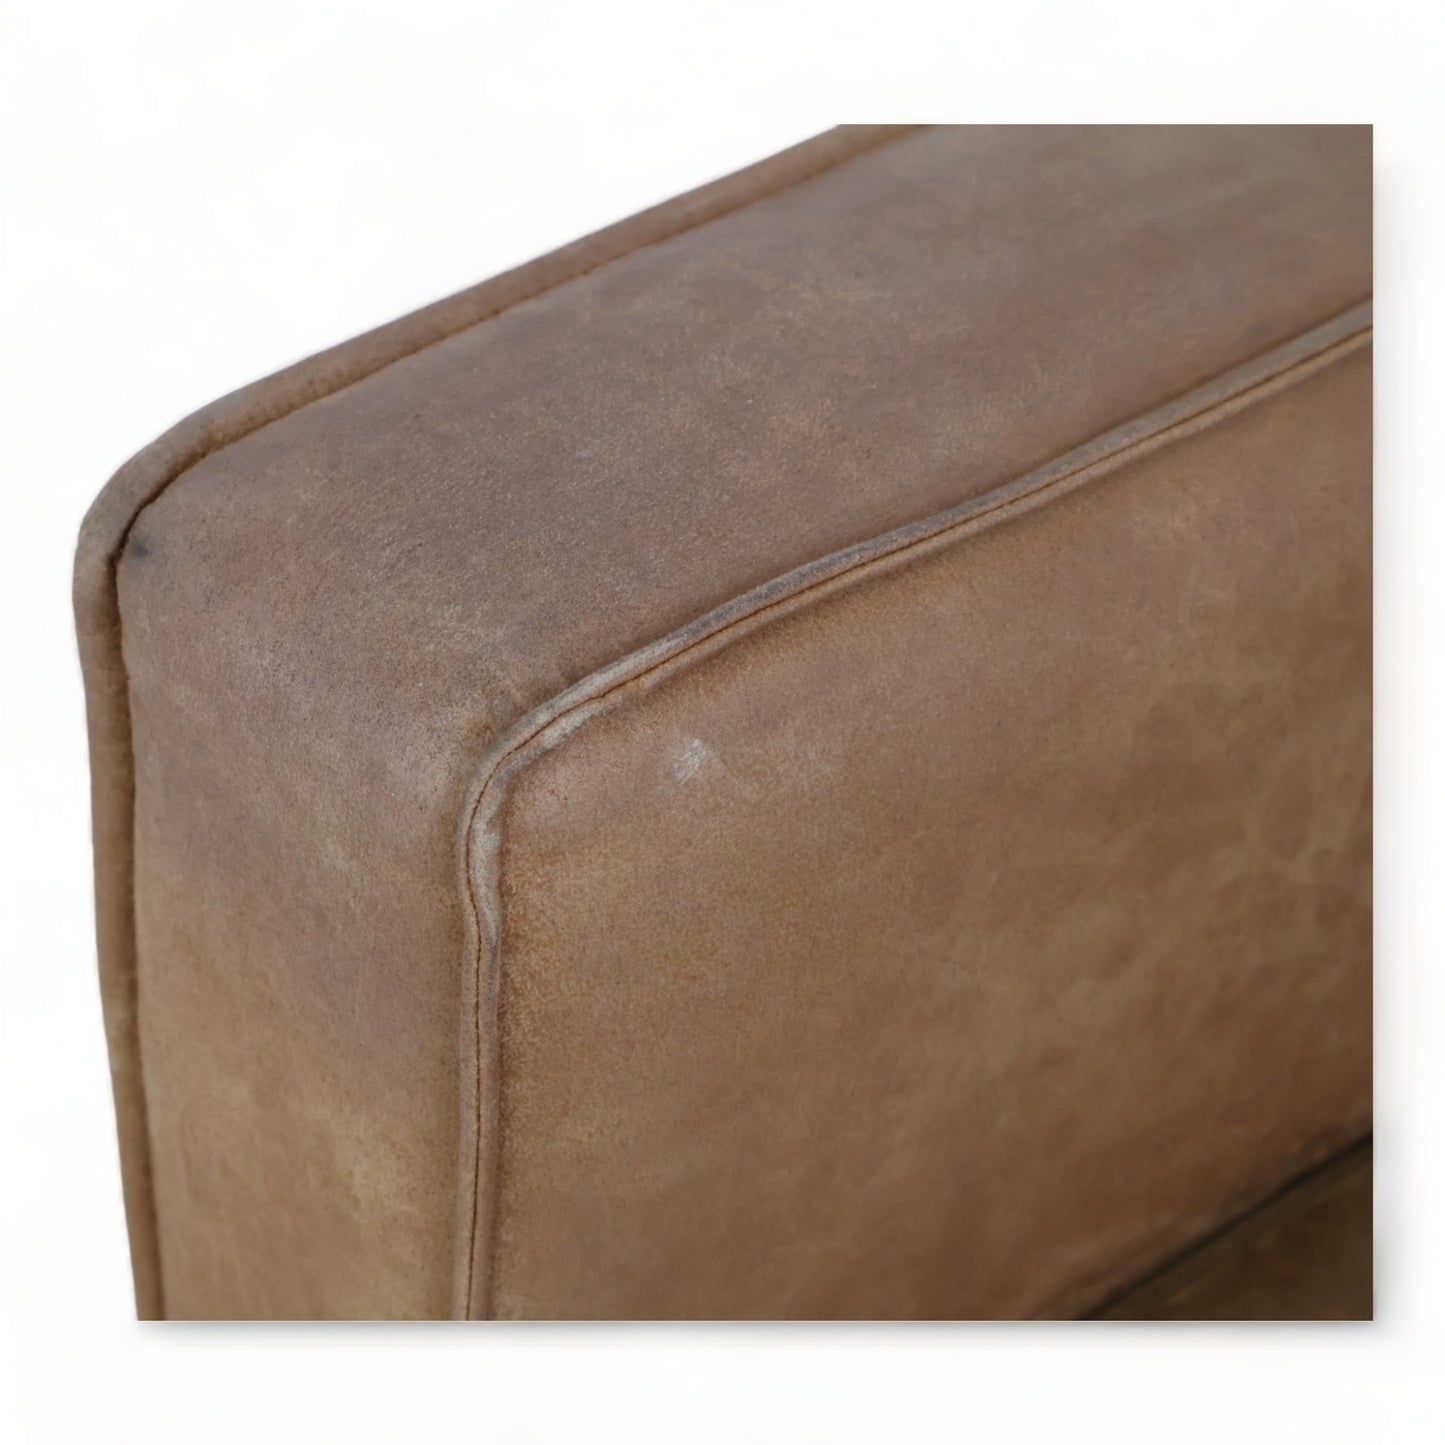 Nyrenset | Lys brun Weston 3-seter sofa